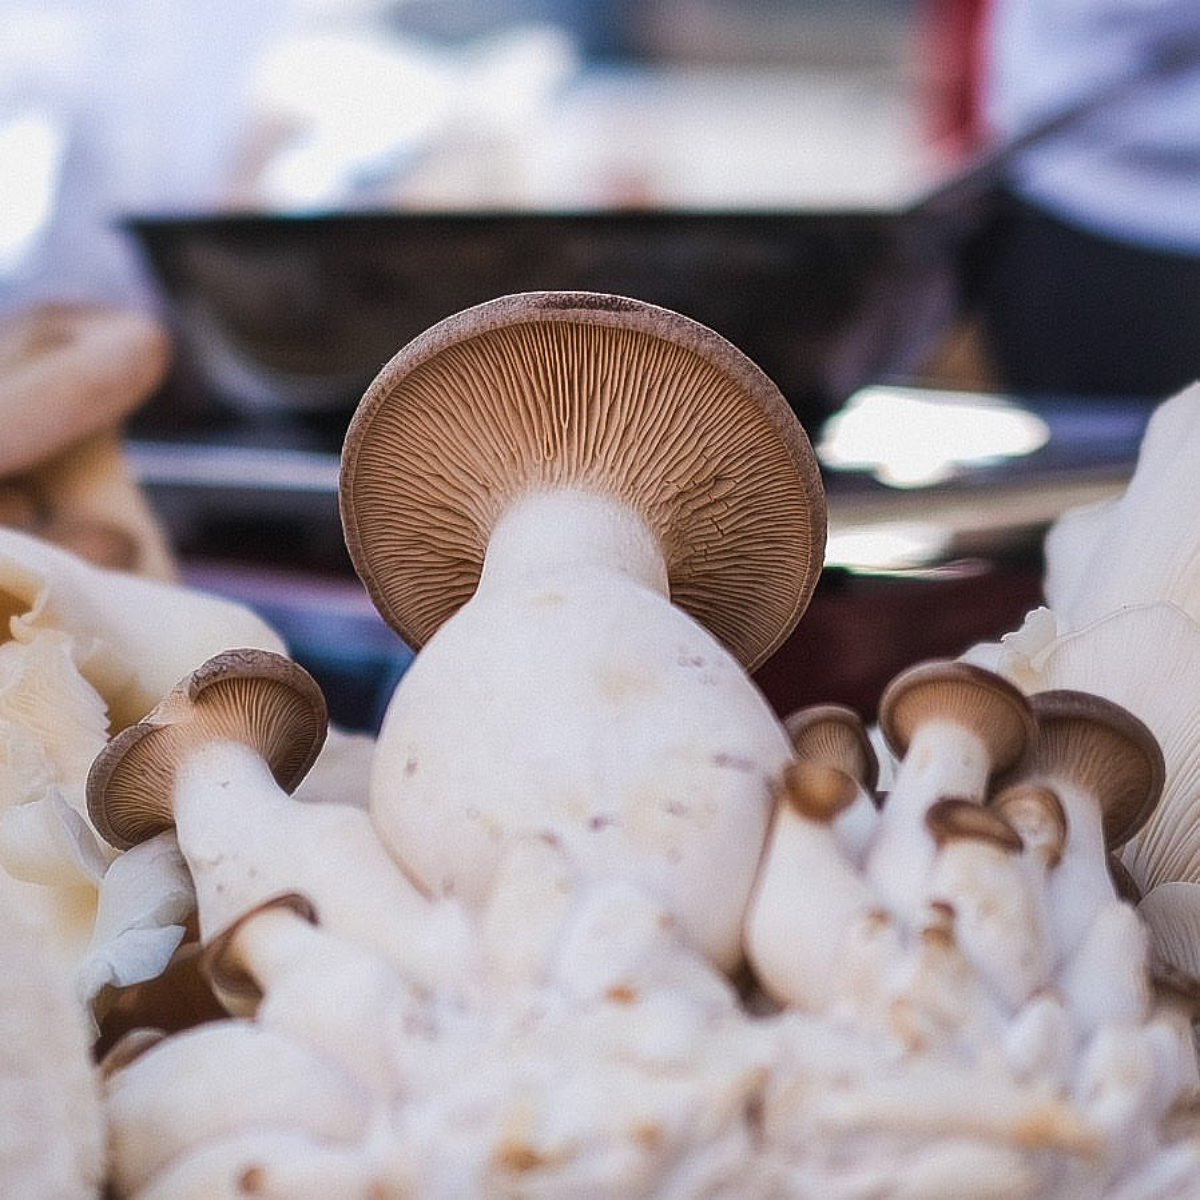 Seaside's Paradise Mushrooms Offers Fresh Fungi at the Farmers Market